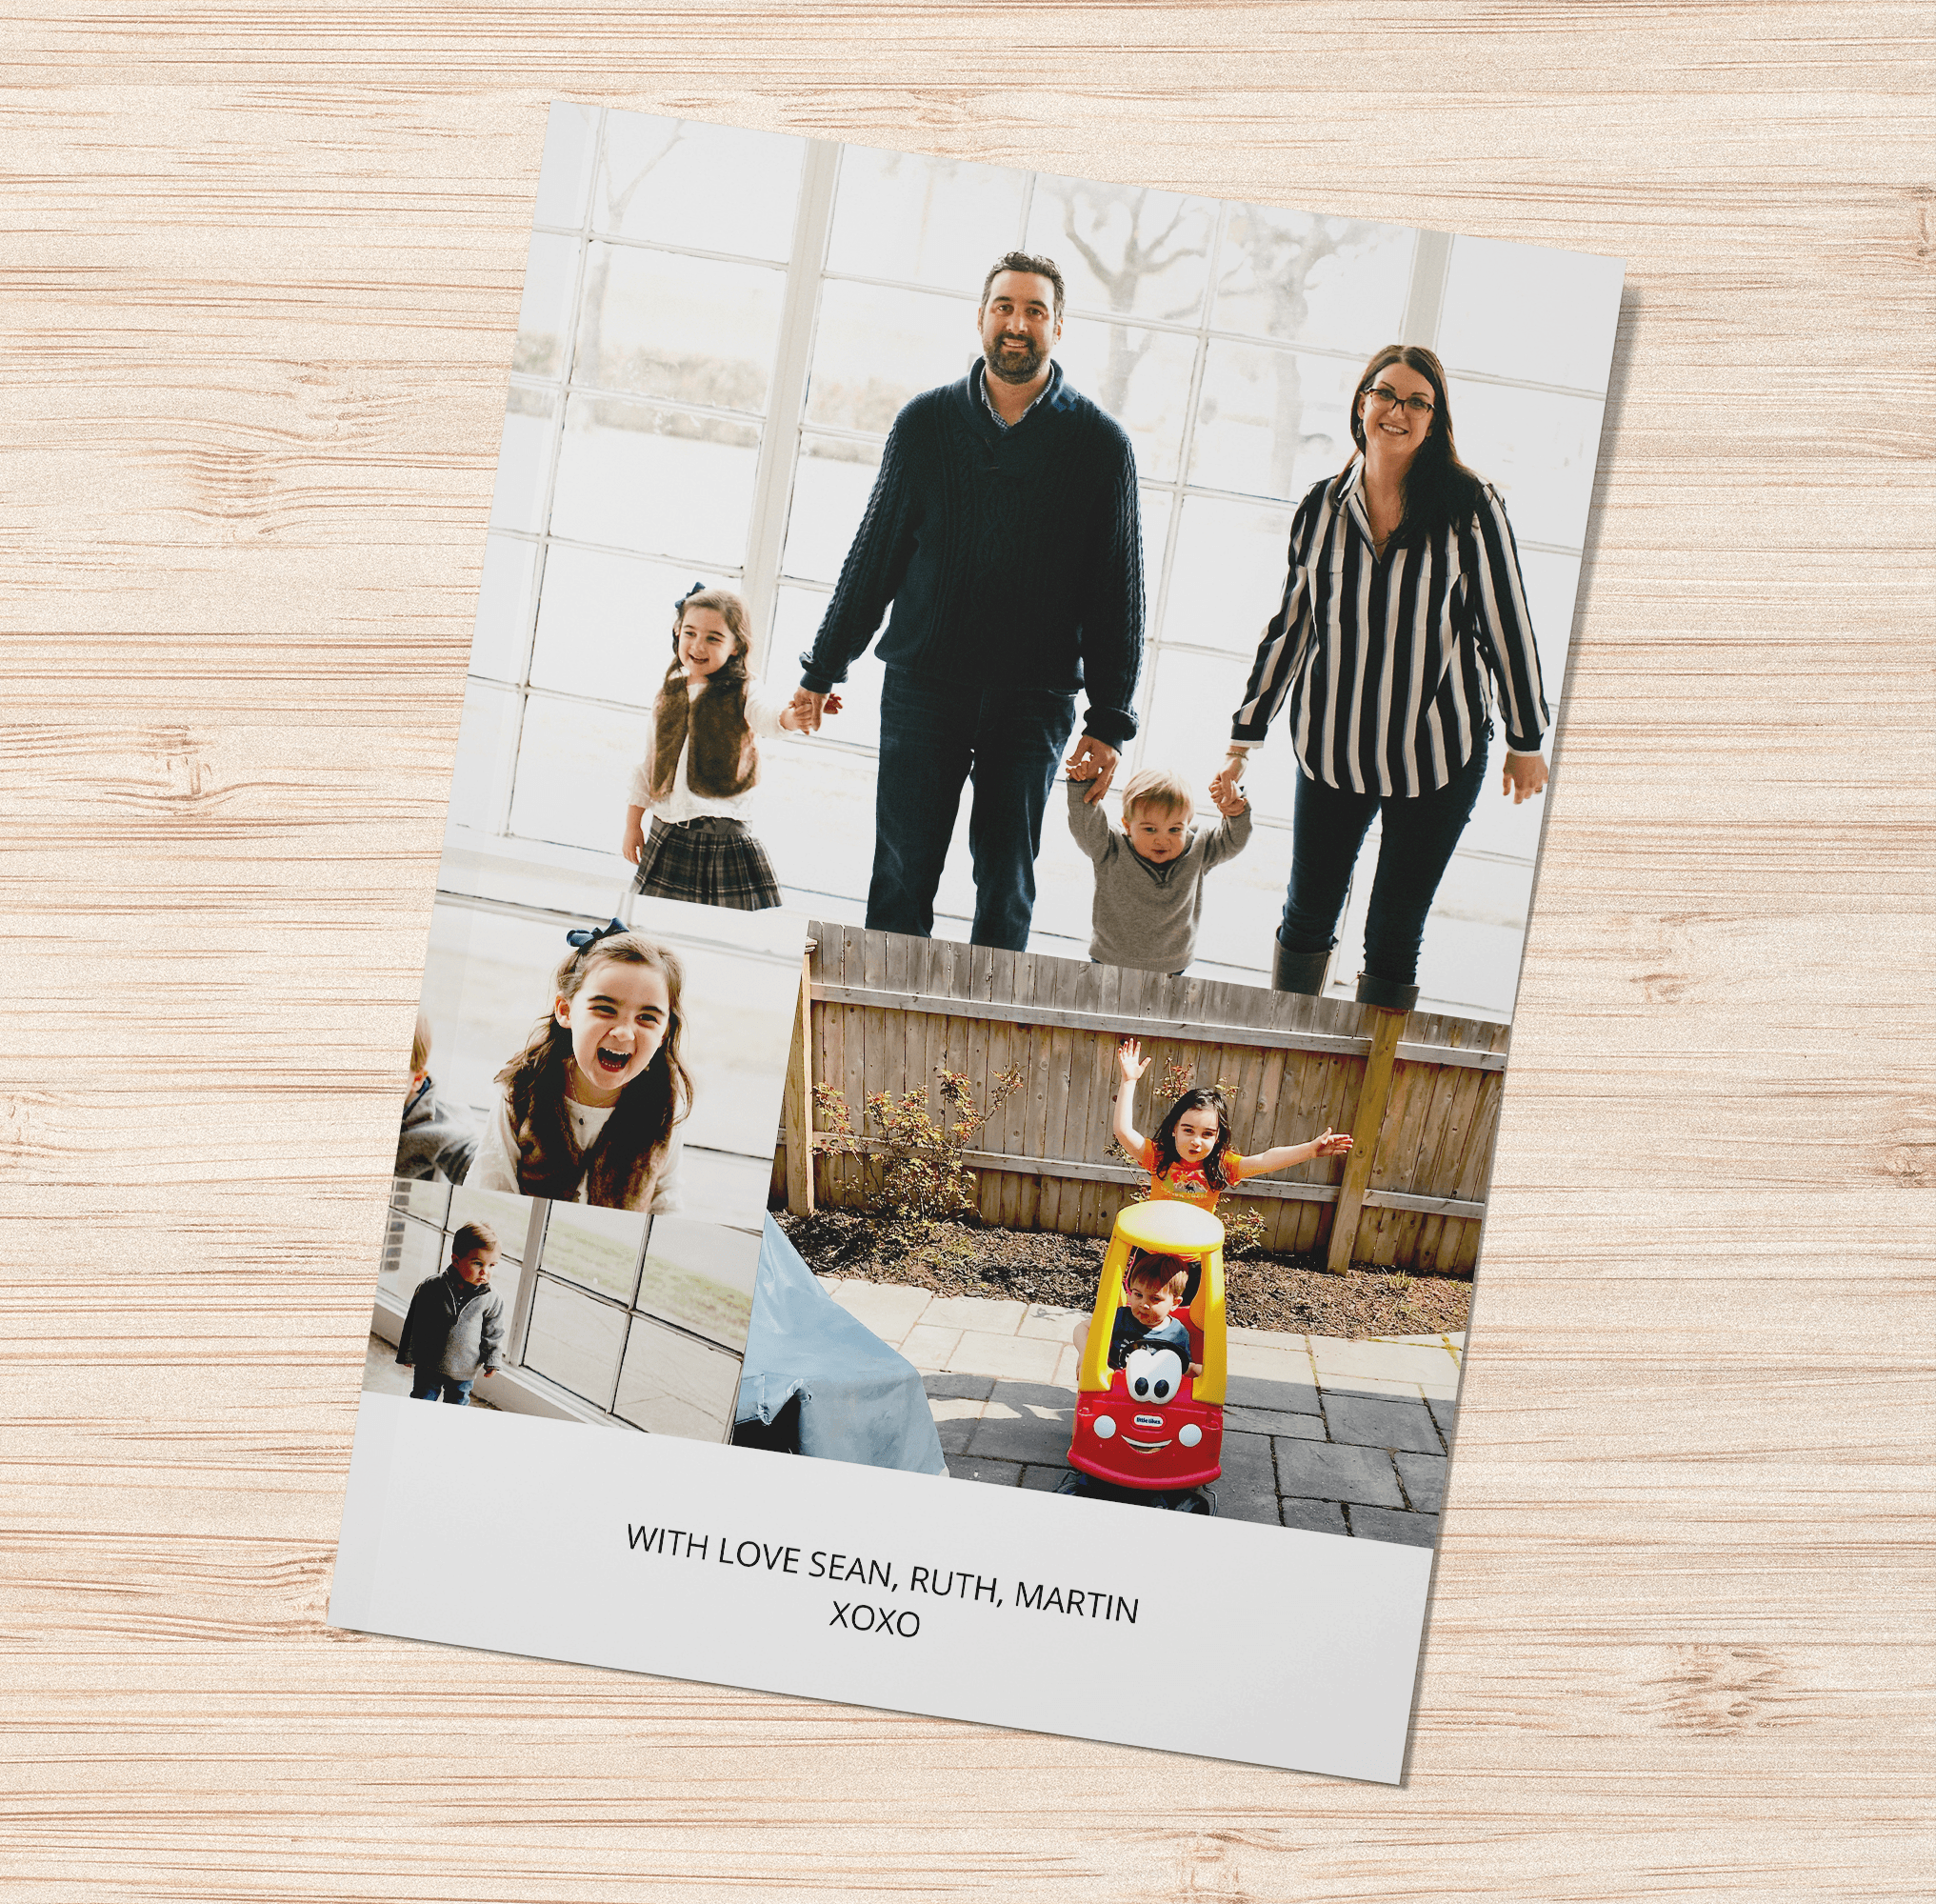 Sean D. creates a family photo card in a folded format